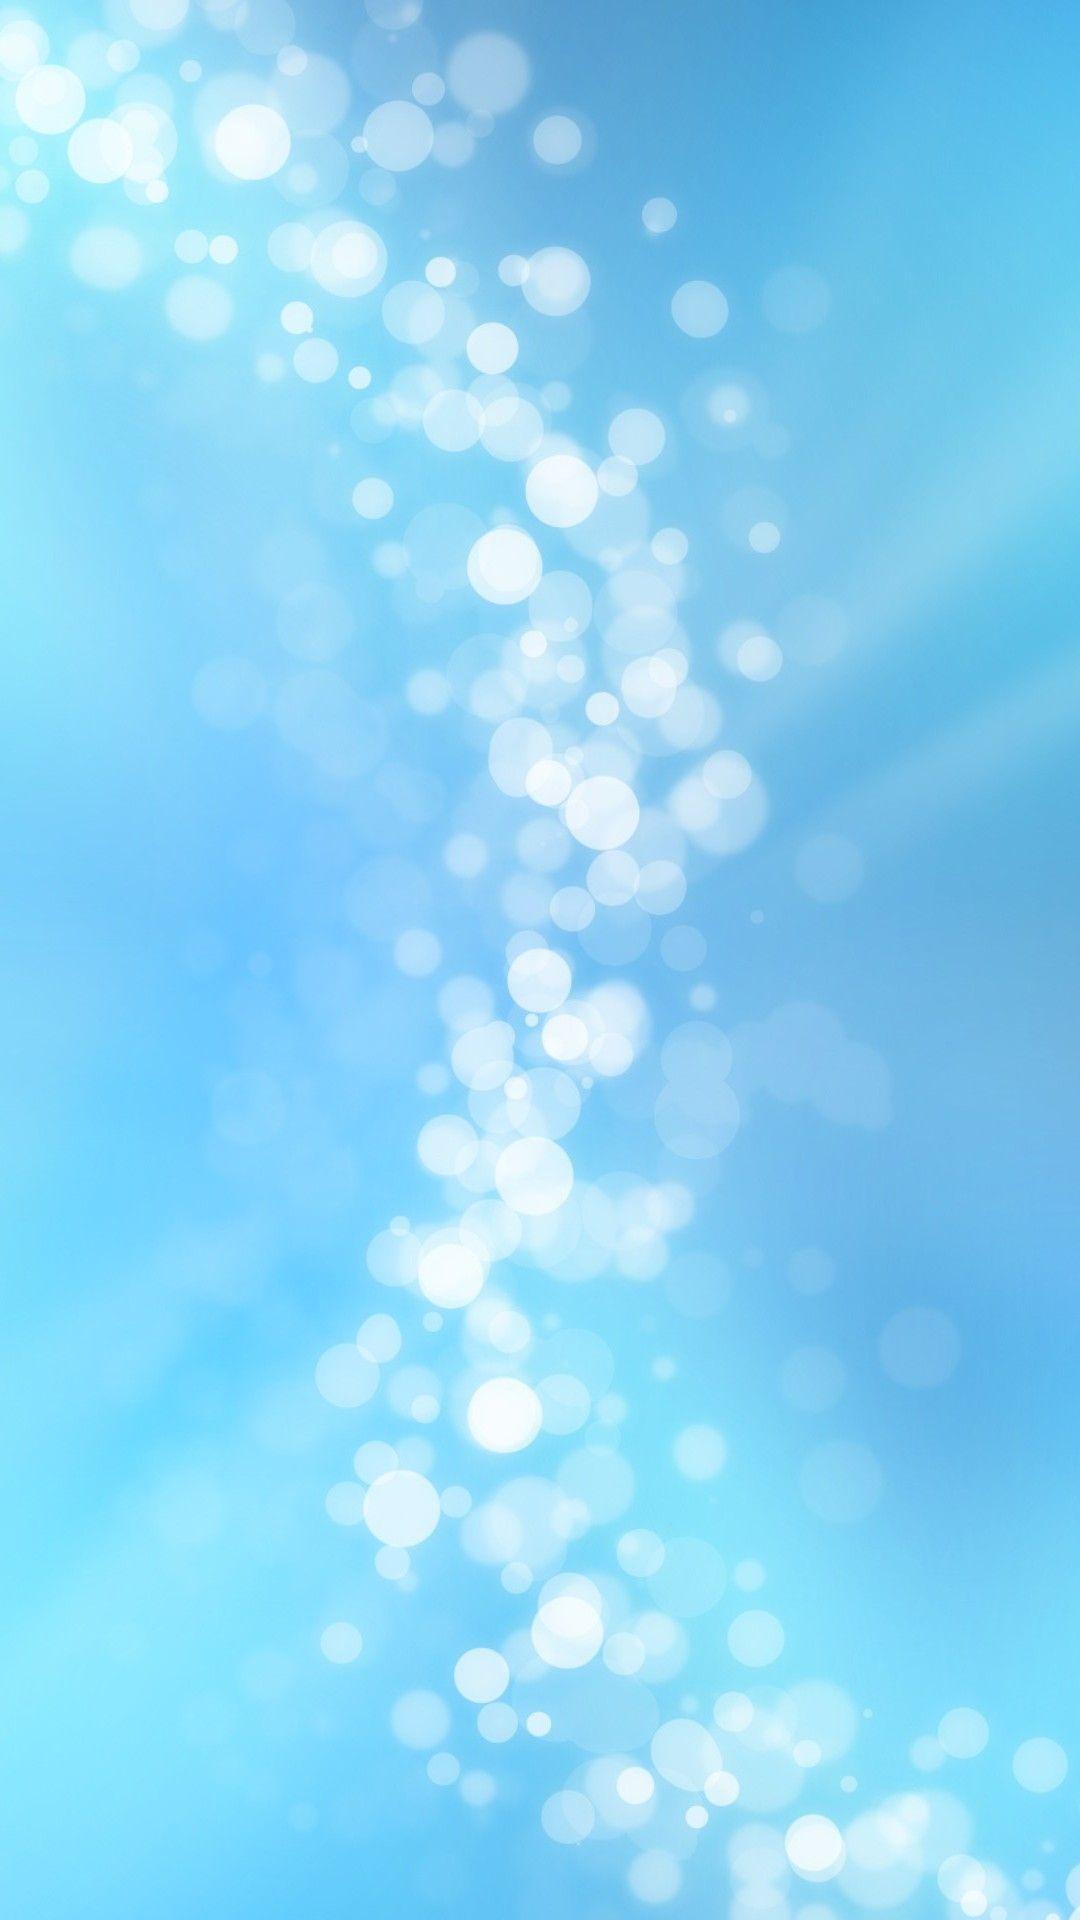 Blue iPhone 5c Default Wallpaper. Bubbles, Brokeh and Some Colors